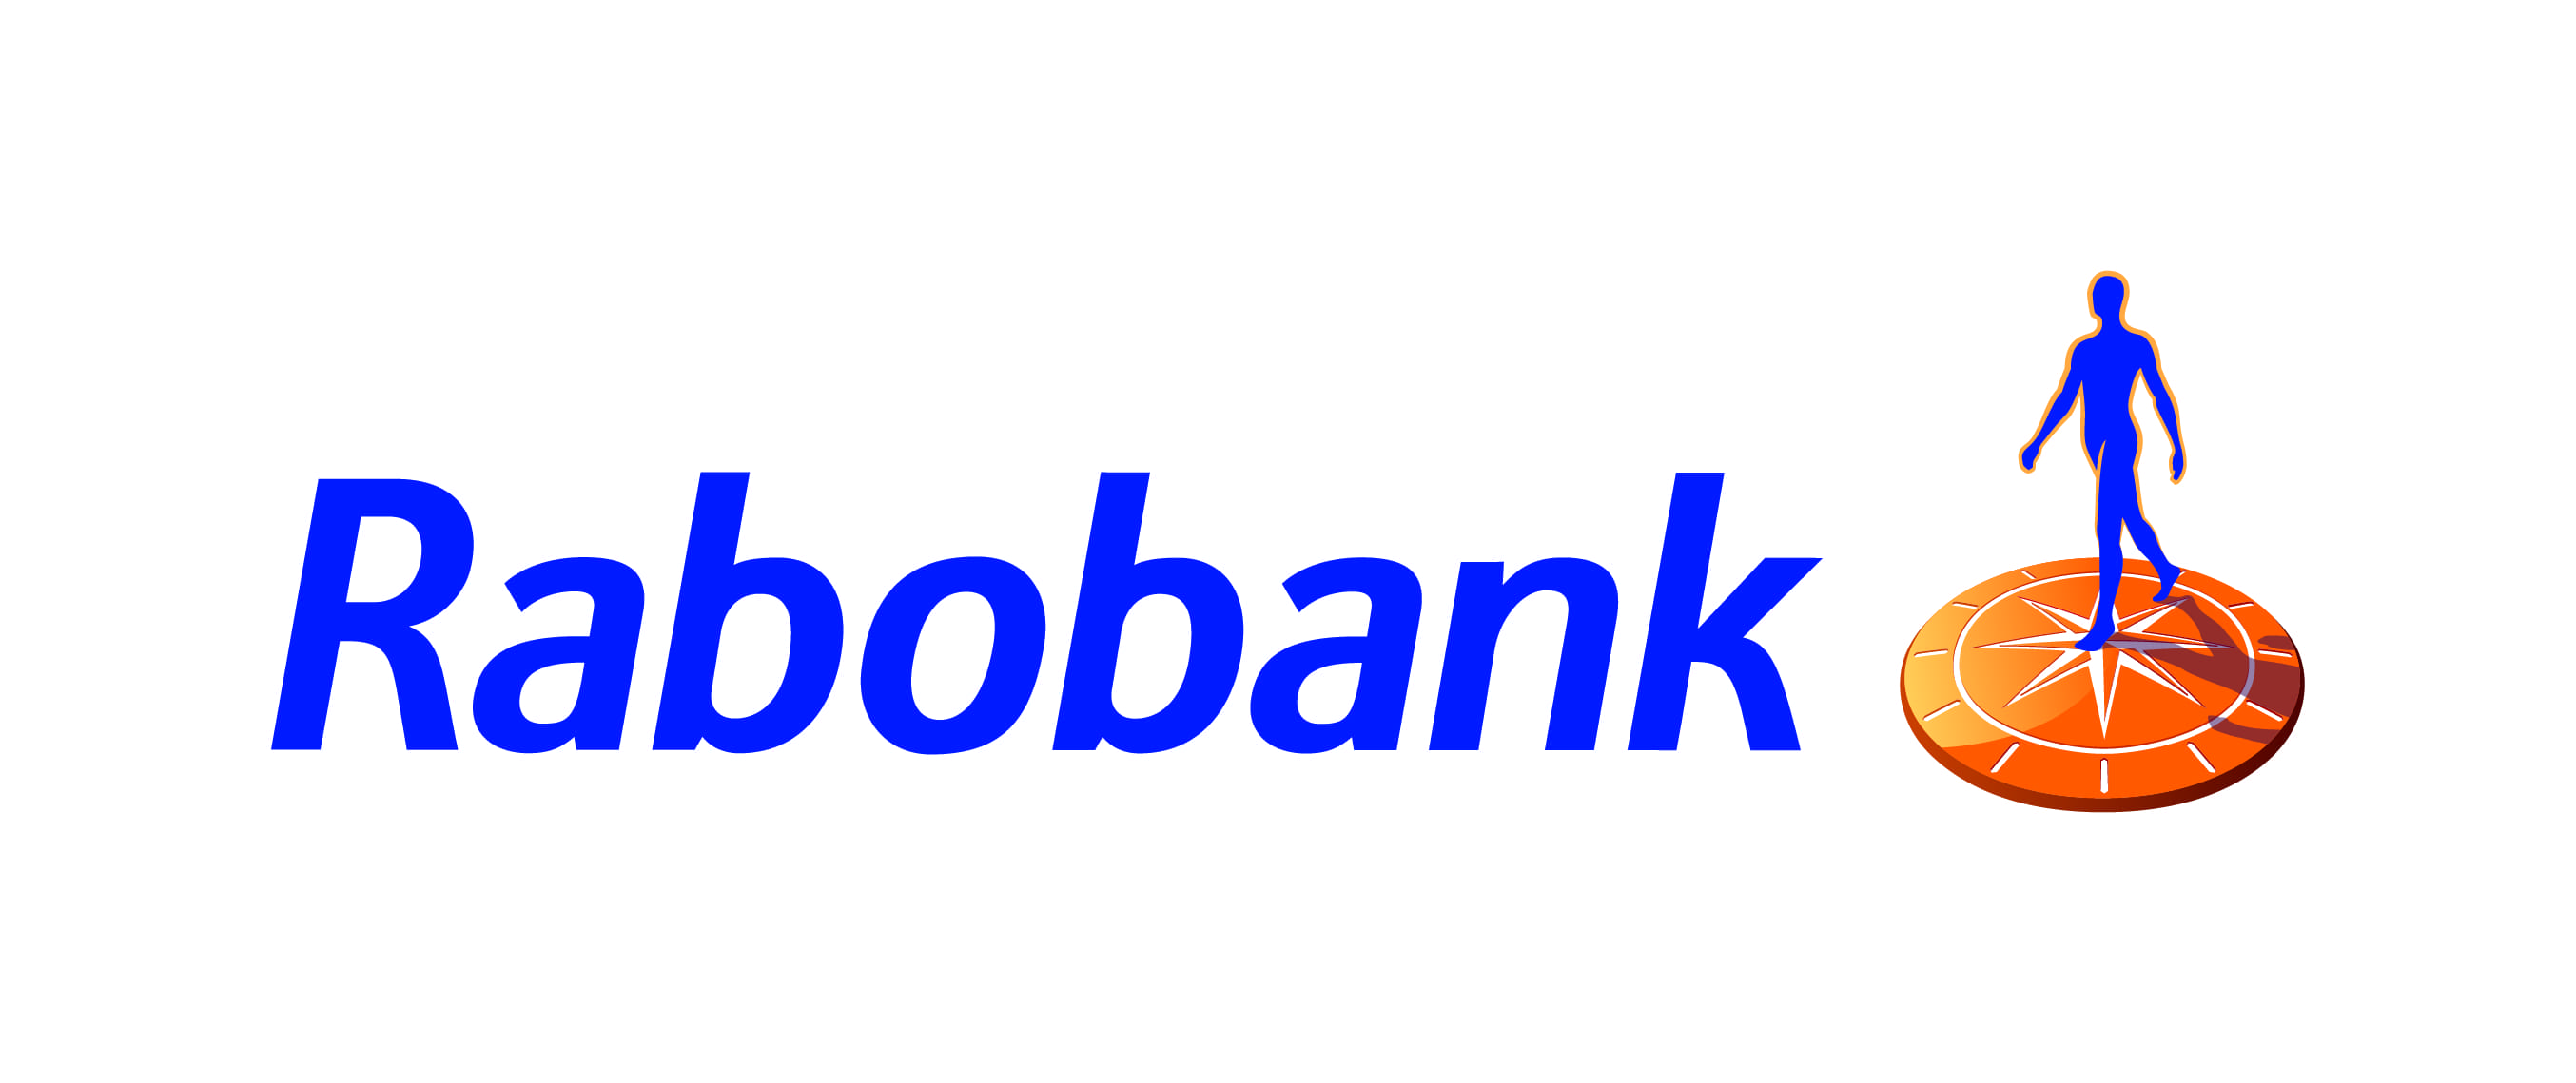 Rabobank Wordmark Imagemark Signoff CMYK (1)